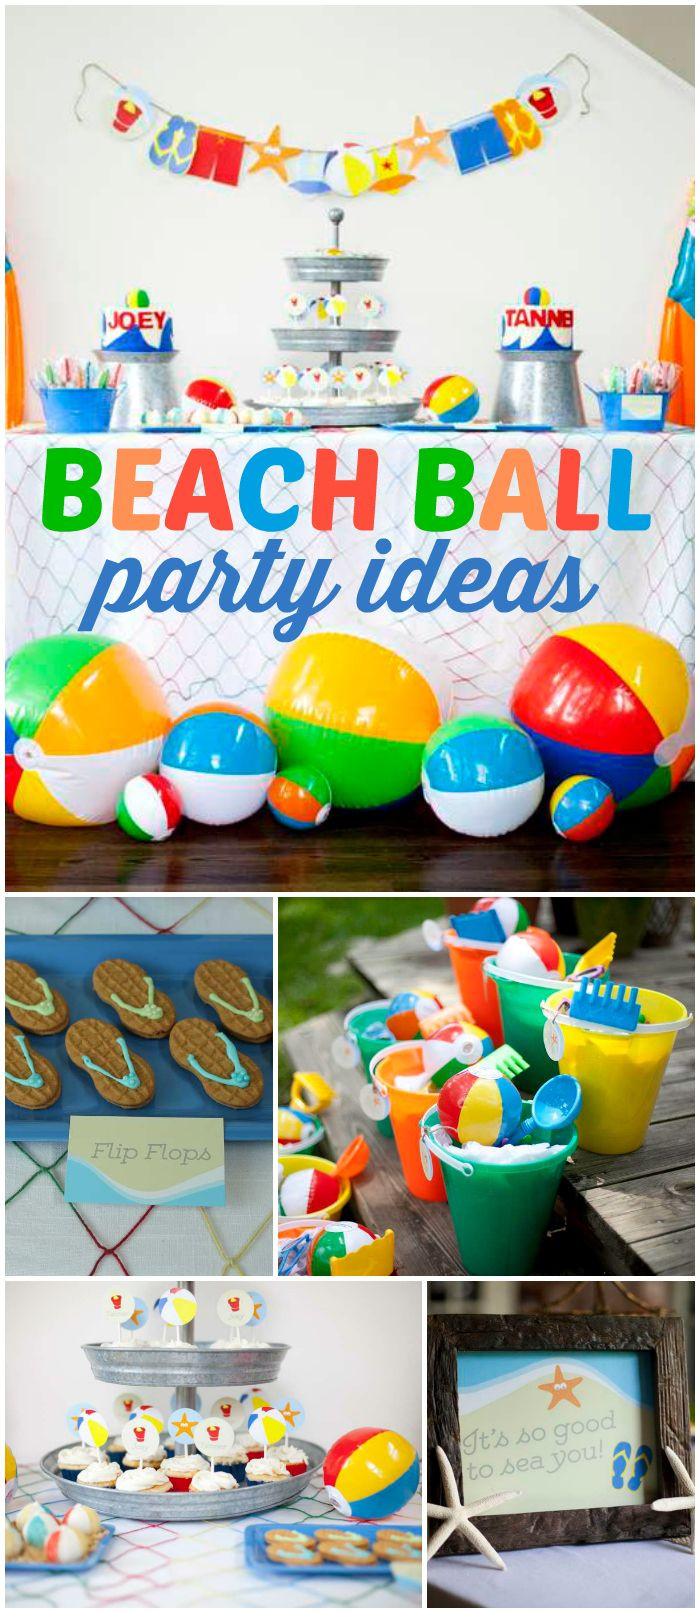 Boy Beach Party Ideas
 Best 25 Kids beach party ideas on Pinterest